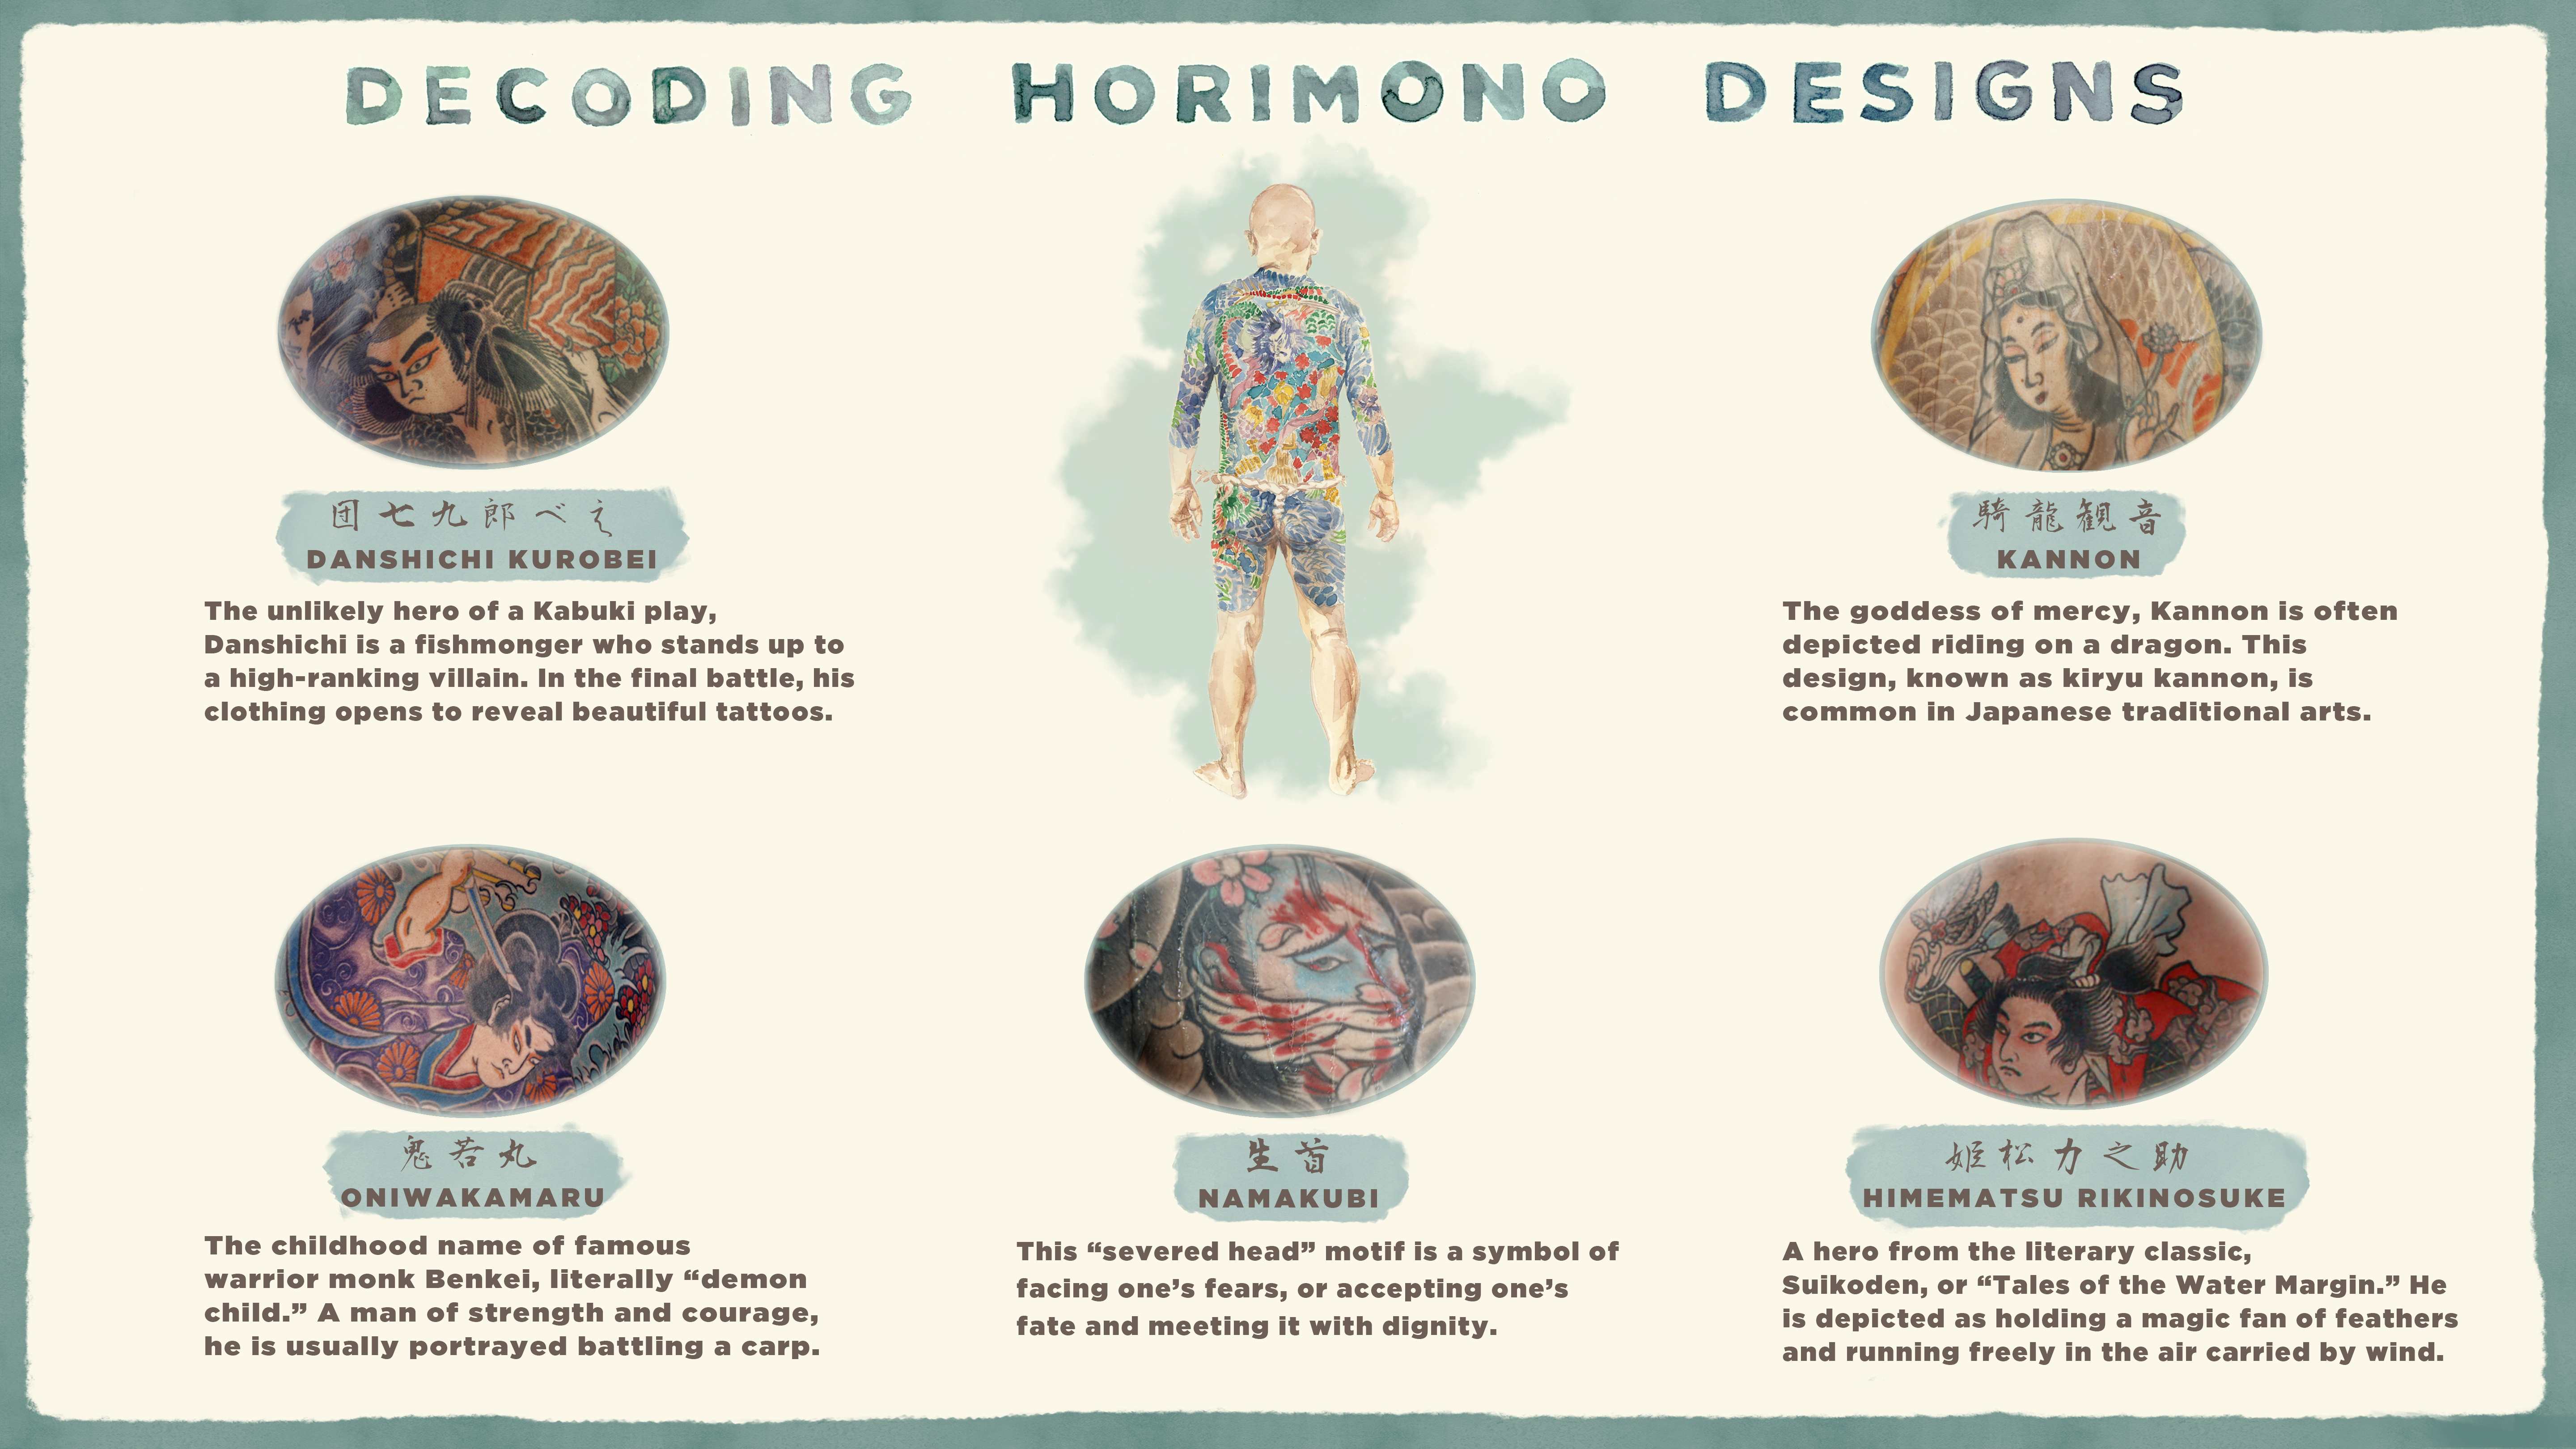 Decoding Hormono Designs4.jpg